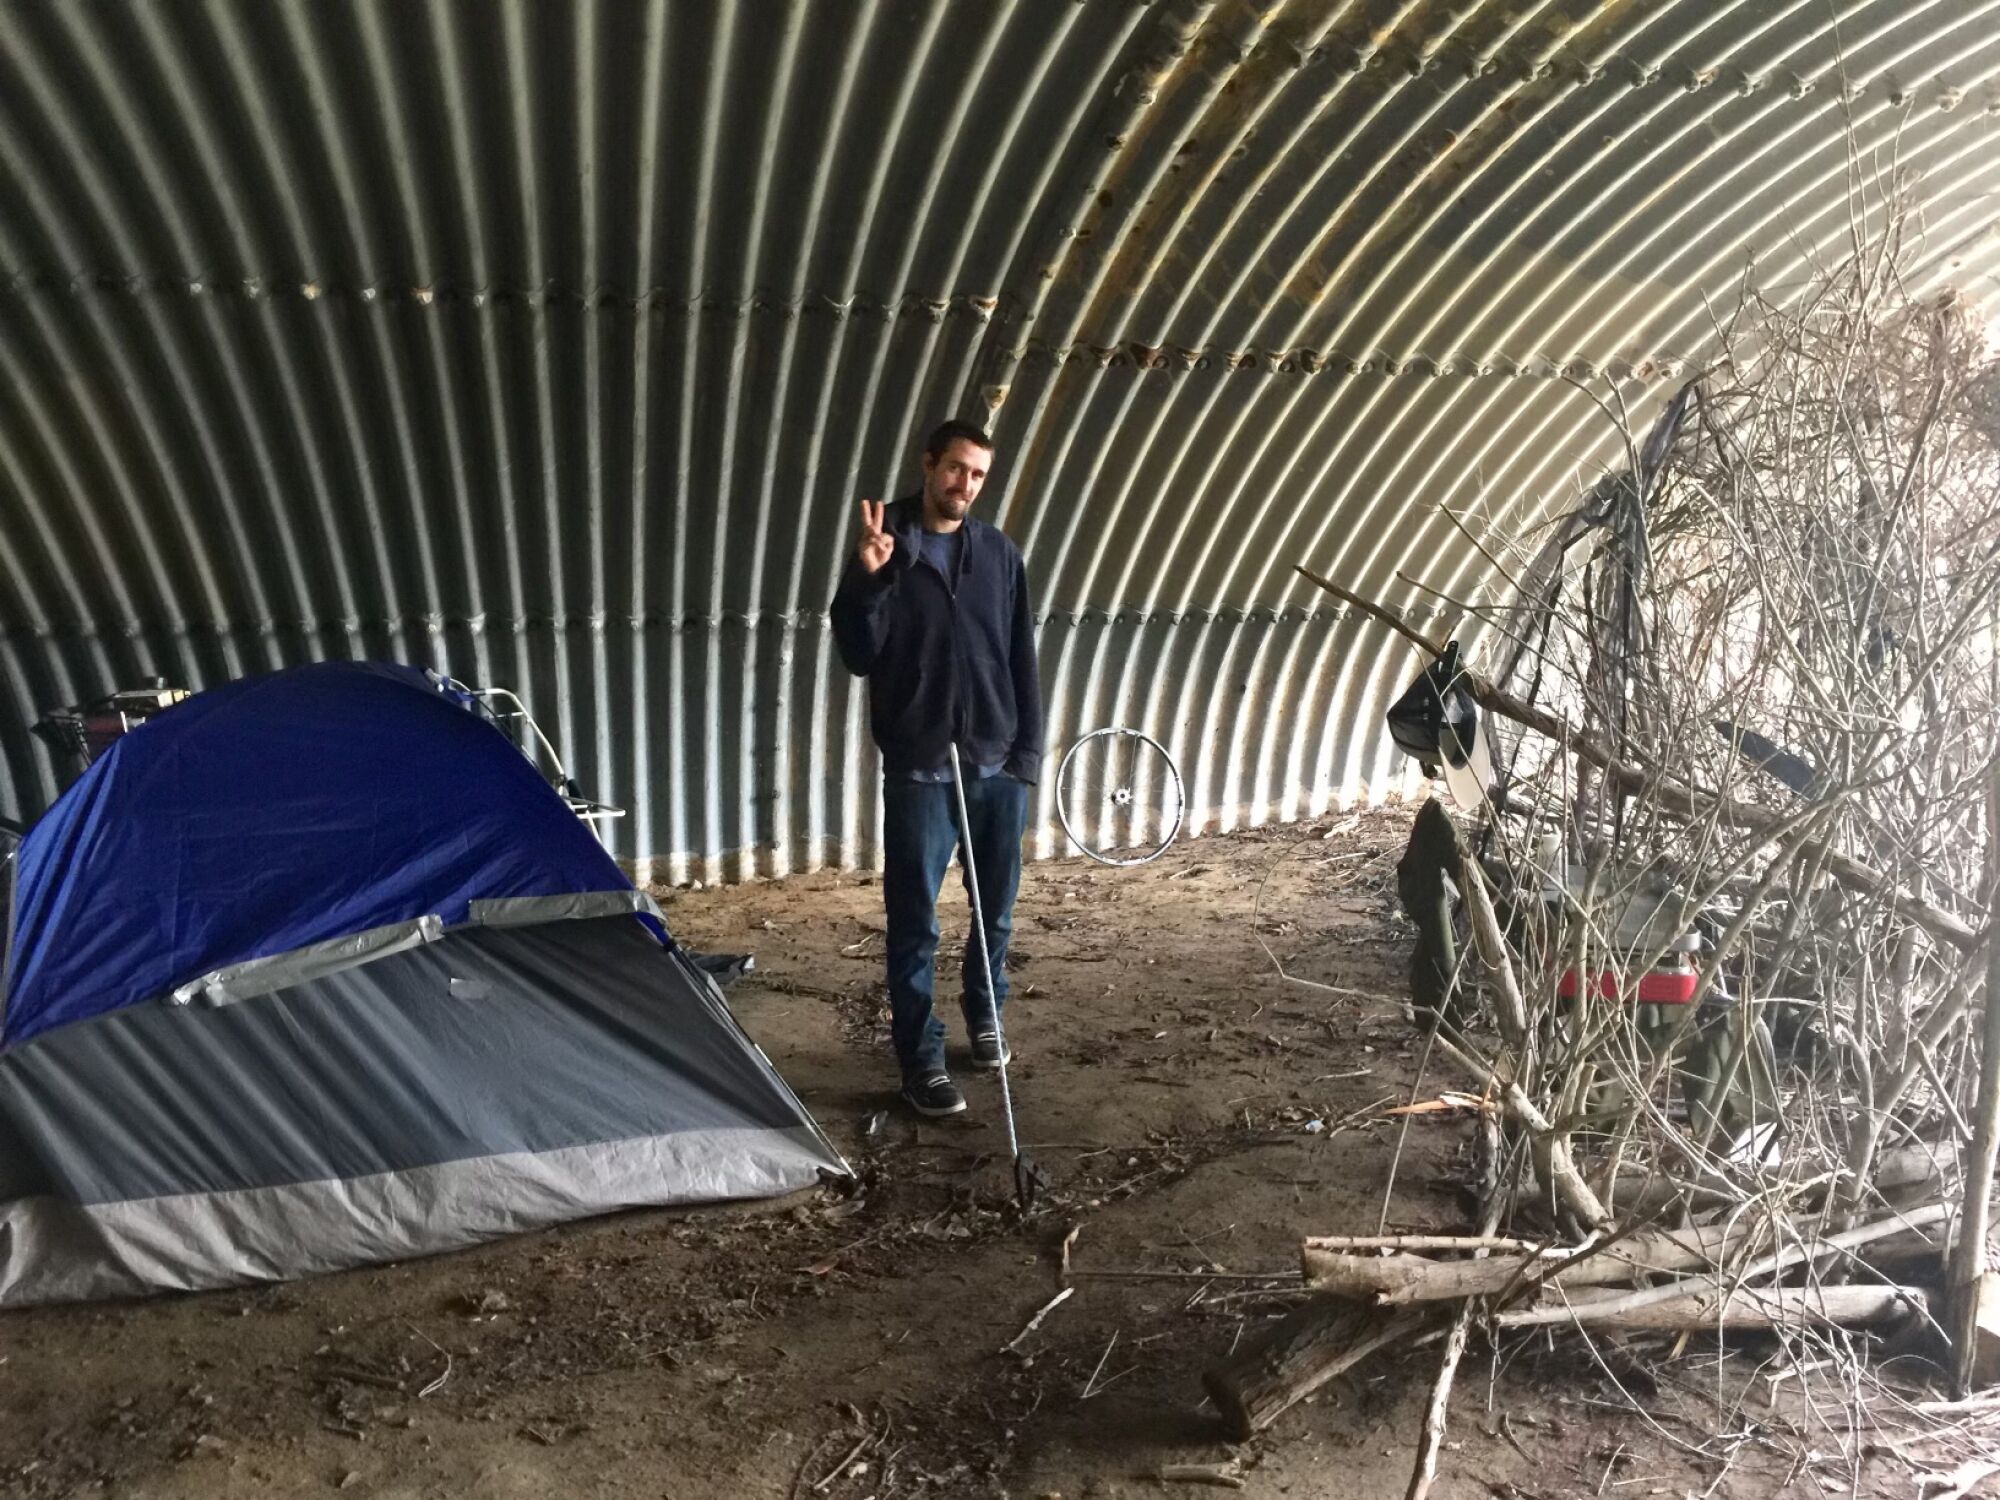 Luke Locatell next to his tent in Encinitas.